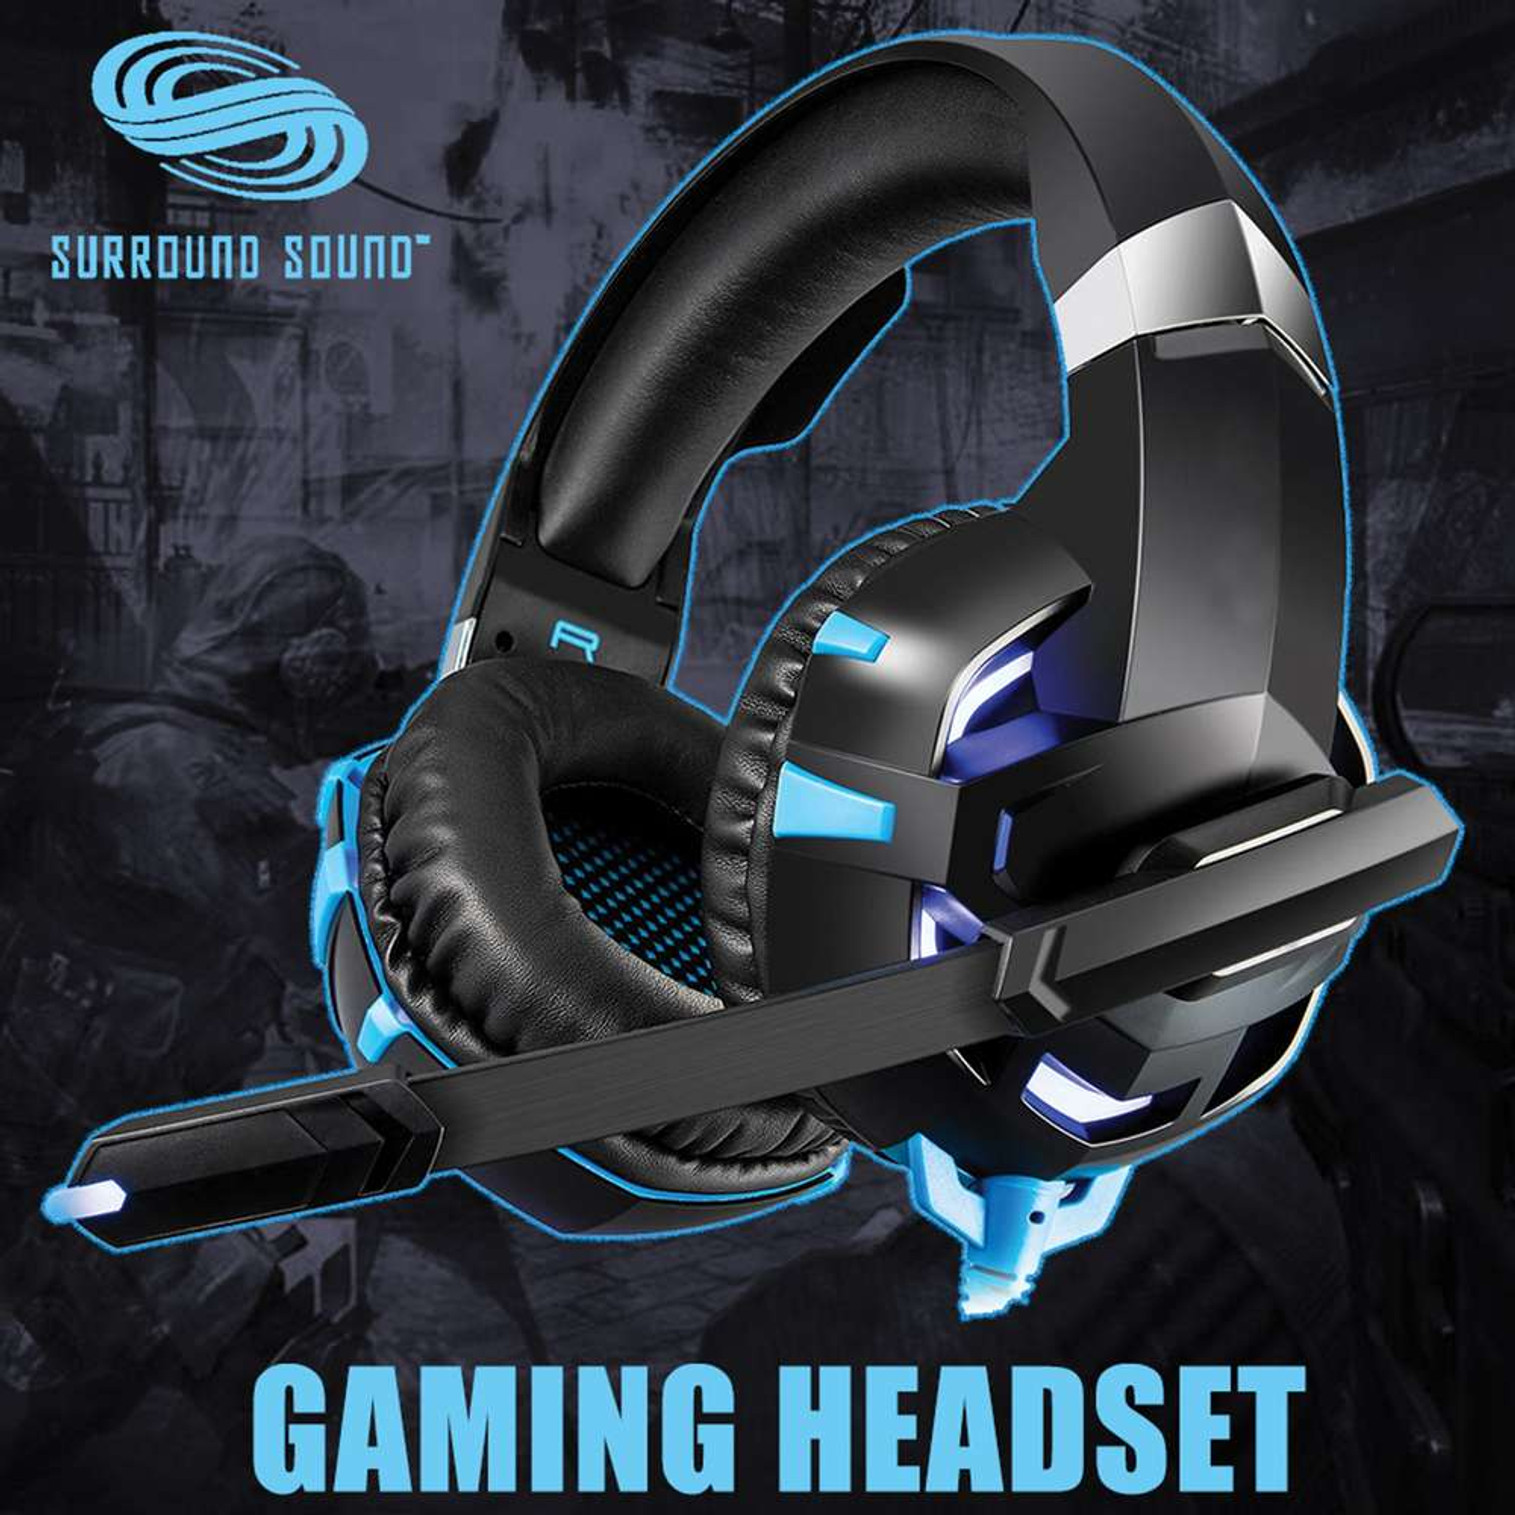 Professional Surround Sound Gaming Headset